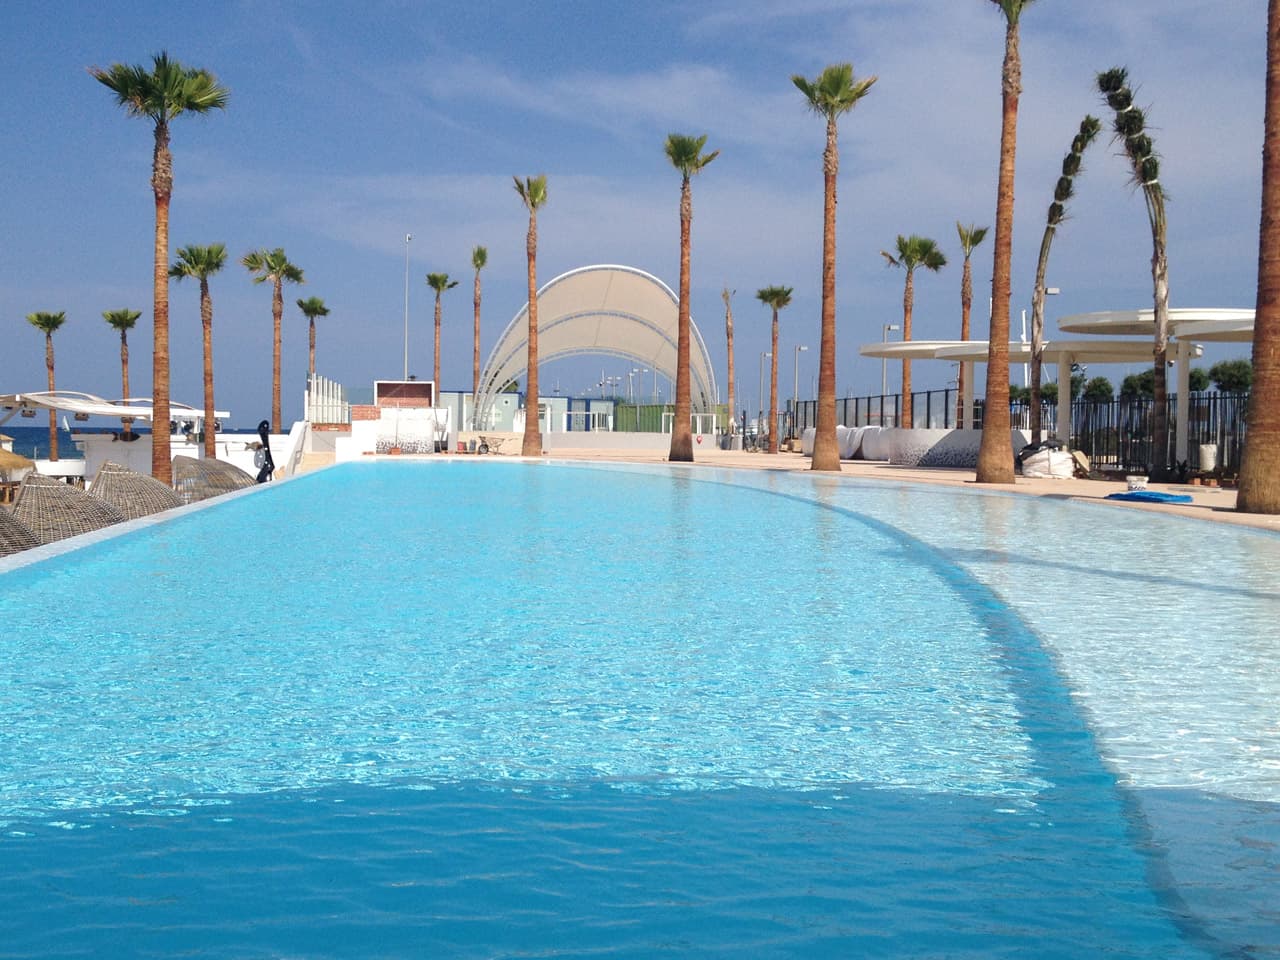 Marina Beach Club: Project of facilities for a beach club in the Marina  Real Juan Carlos I of Valencia | NOVAIng